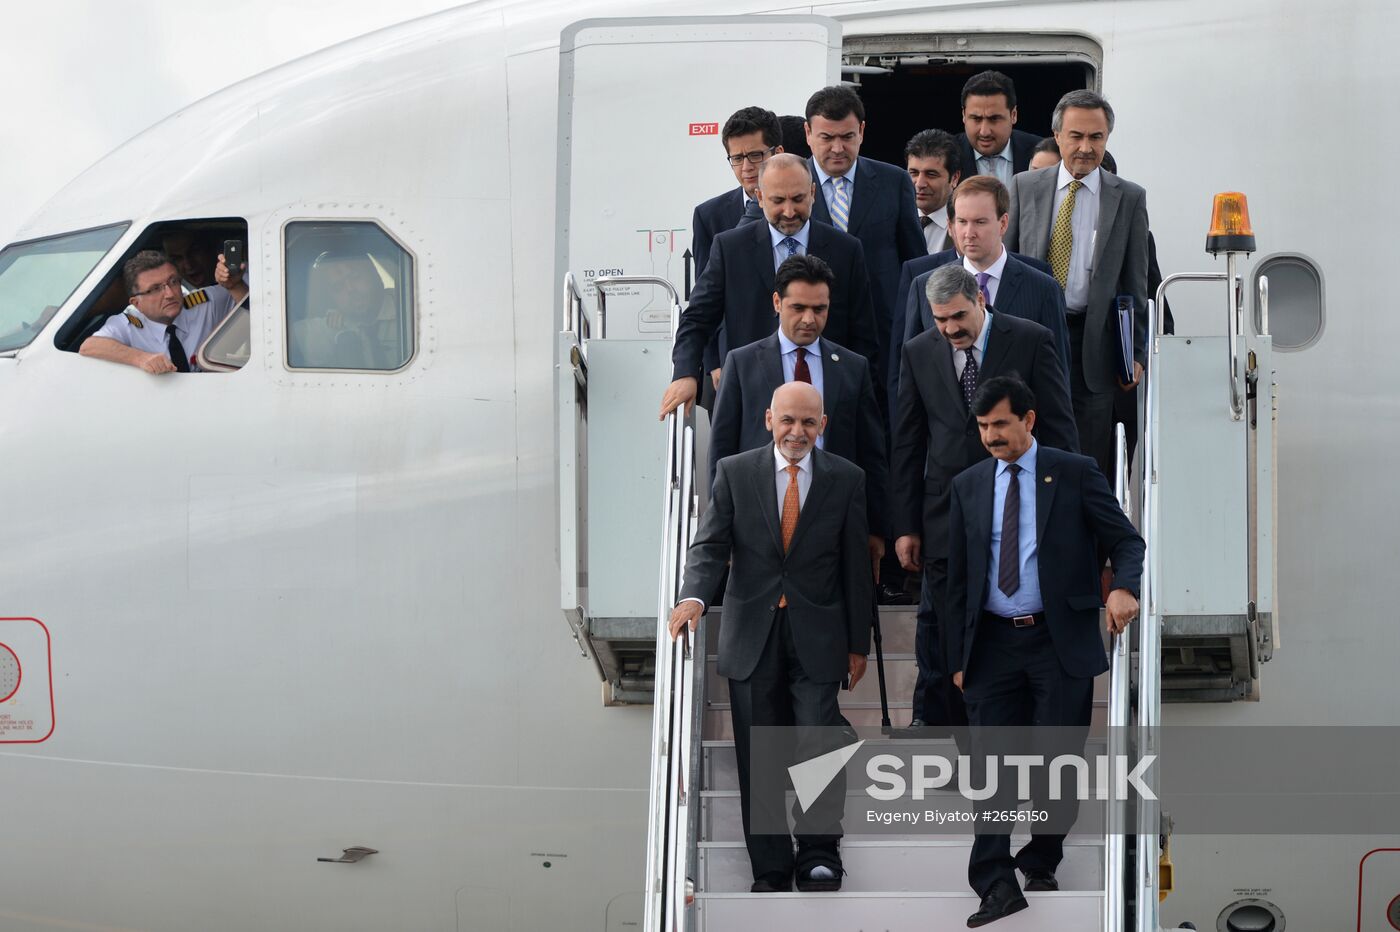 President of the Islamic Republic of Afghanistan Ashraf Ghani Ahmadzai arrives in Ufa